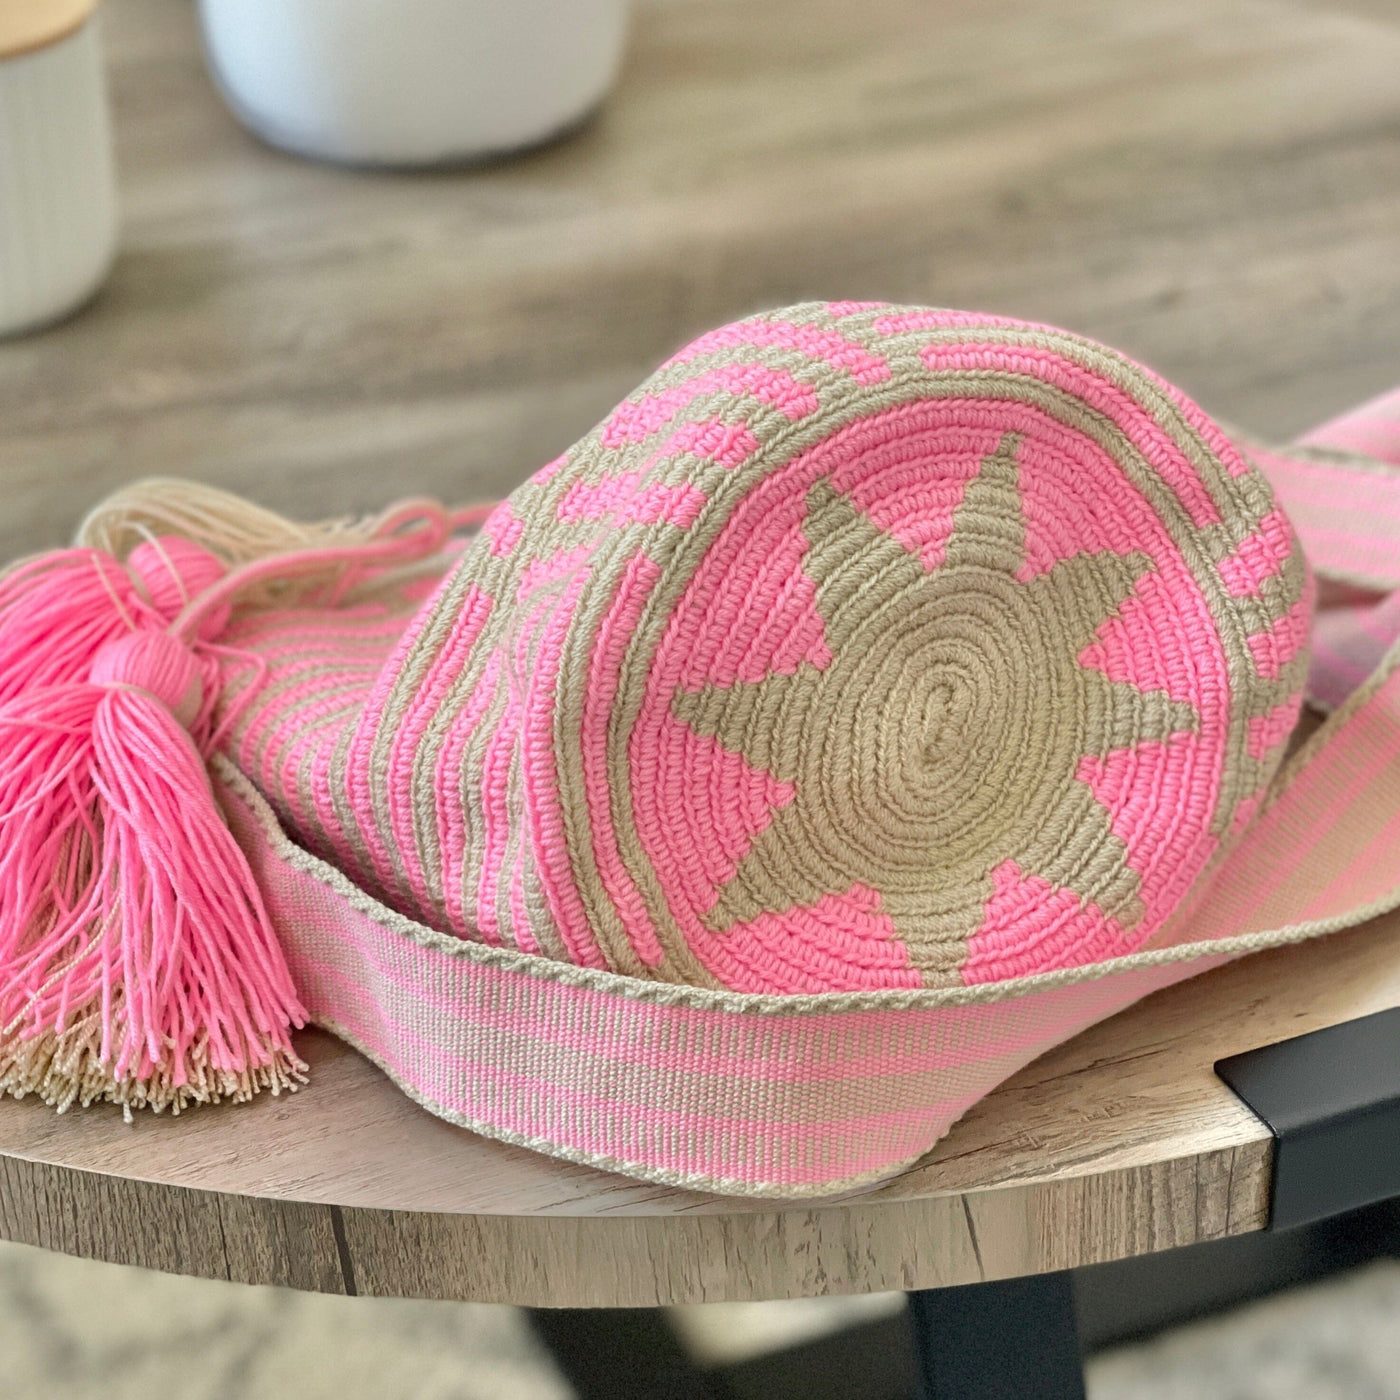 Bottom mandala Pink - Neutral Bag for spring | Crossbody Casual Bag | Medium Boho Bag | Colorful 4U